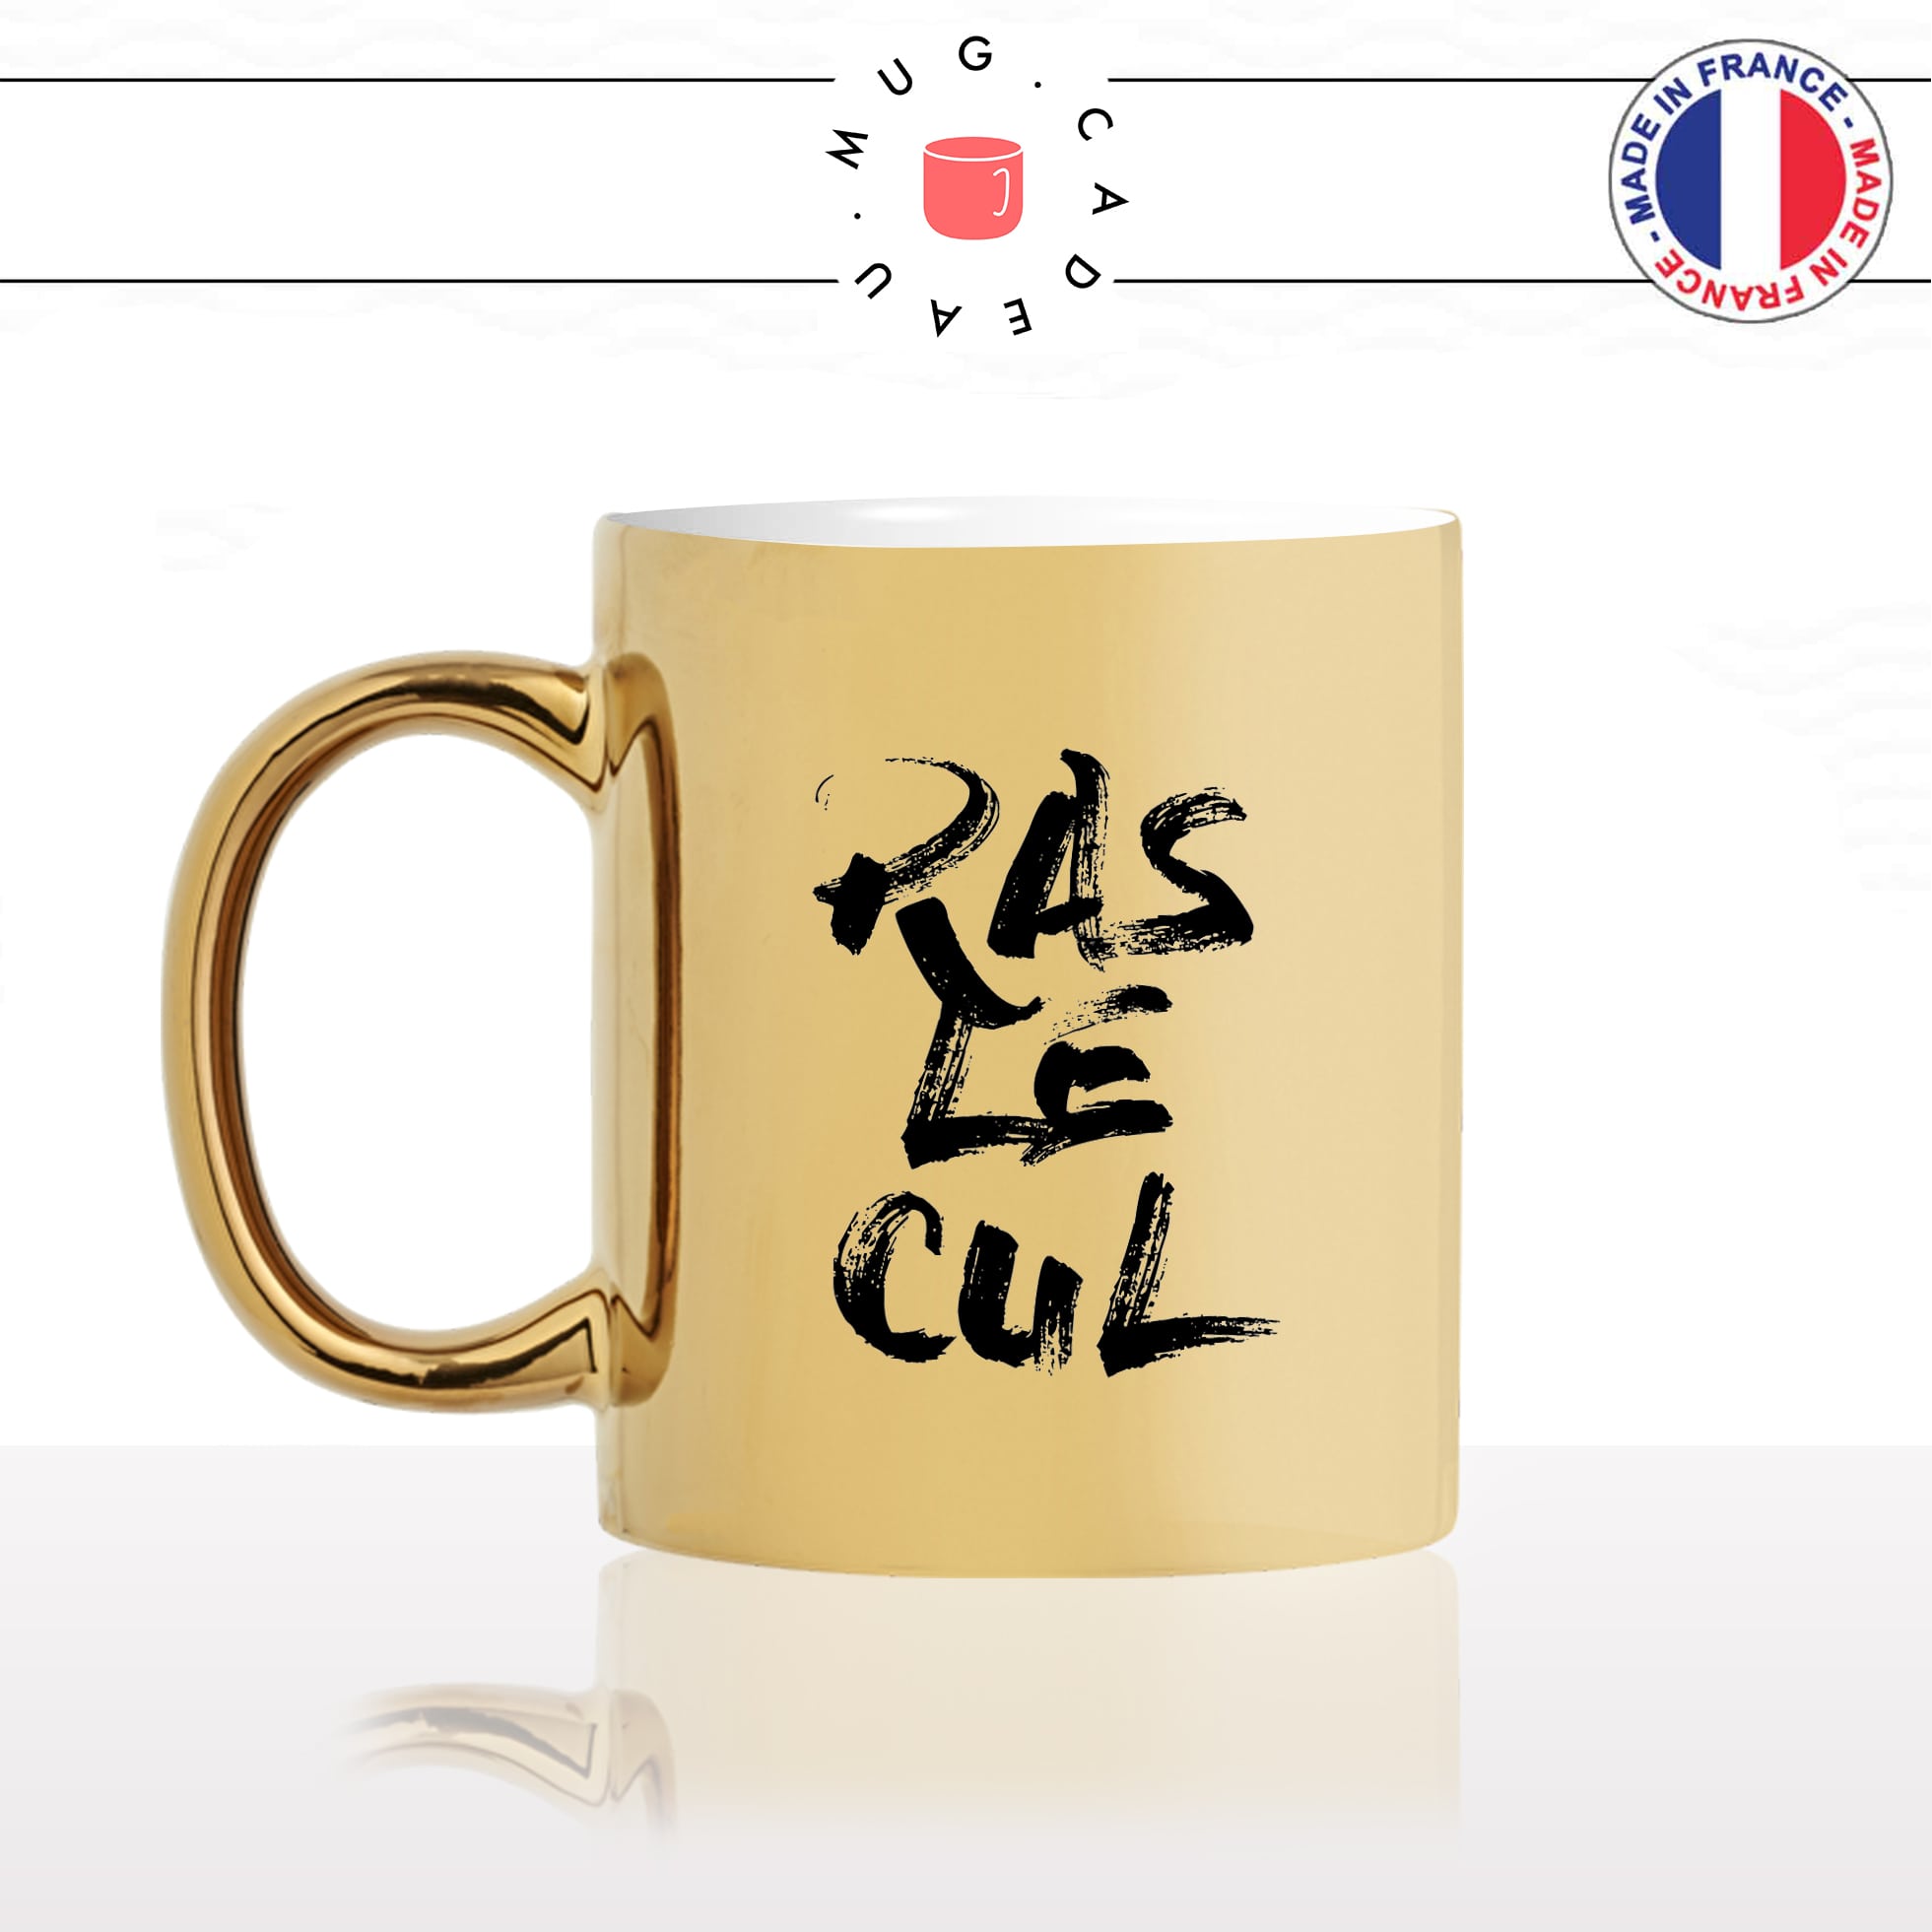 mug-tasse-or-doré-gold-ras-le-cul-jen-ai-marre-expression-phrase-fransaice-humour-fun-idée-cadeau-originale-cool-min